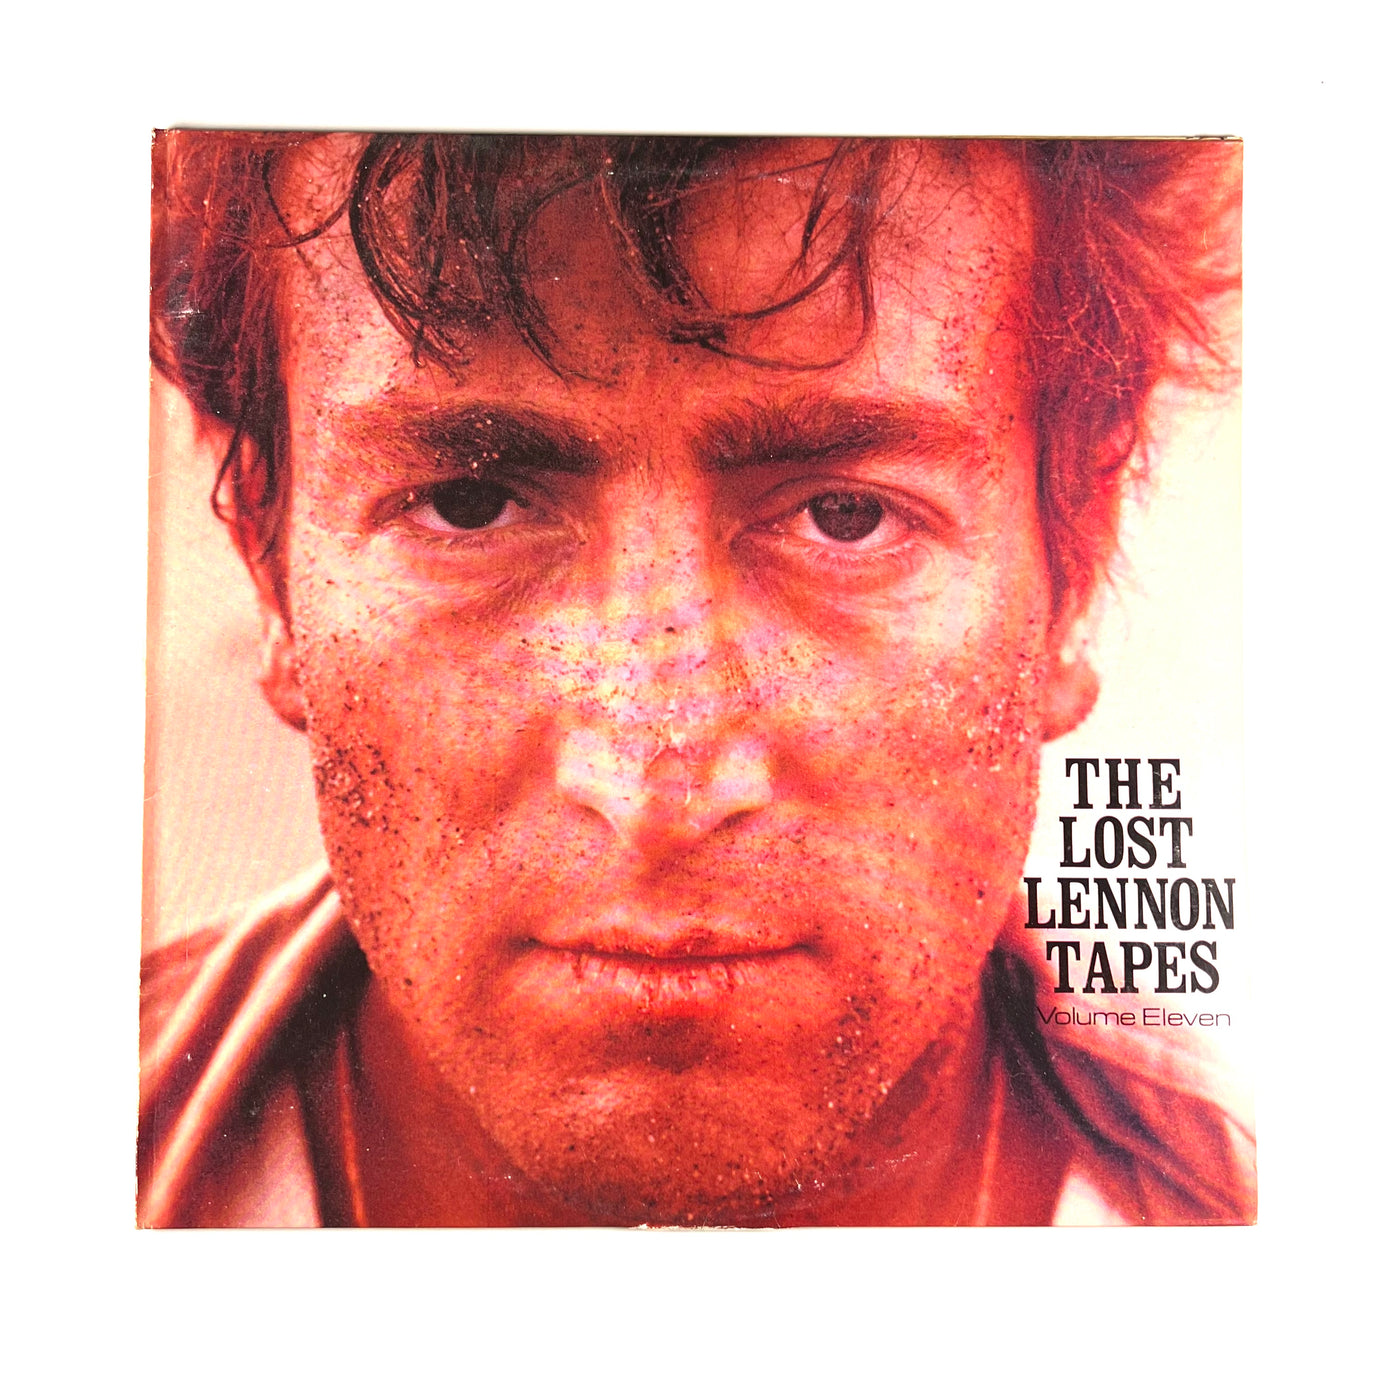 John Lennon - The Lost Lennon Tapes Volume Eleven